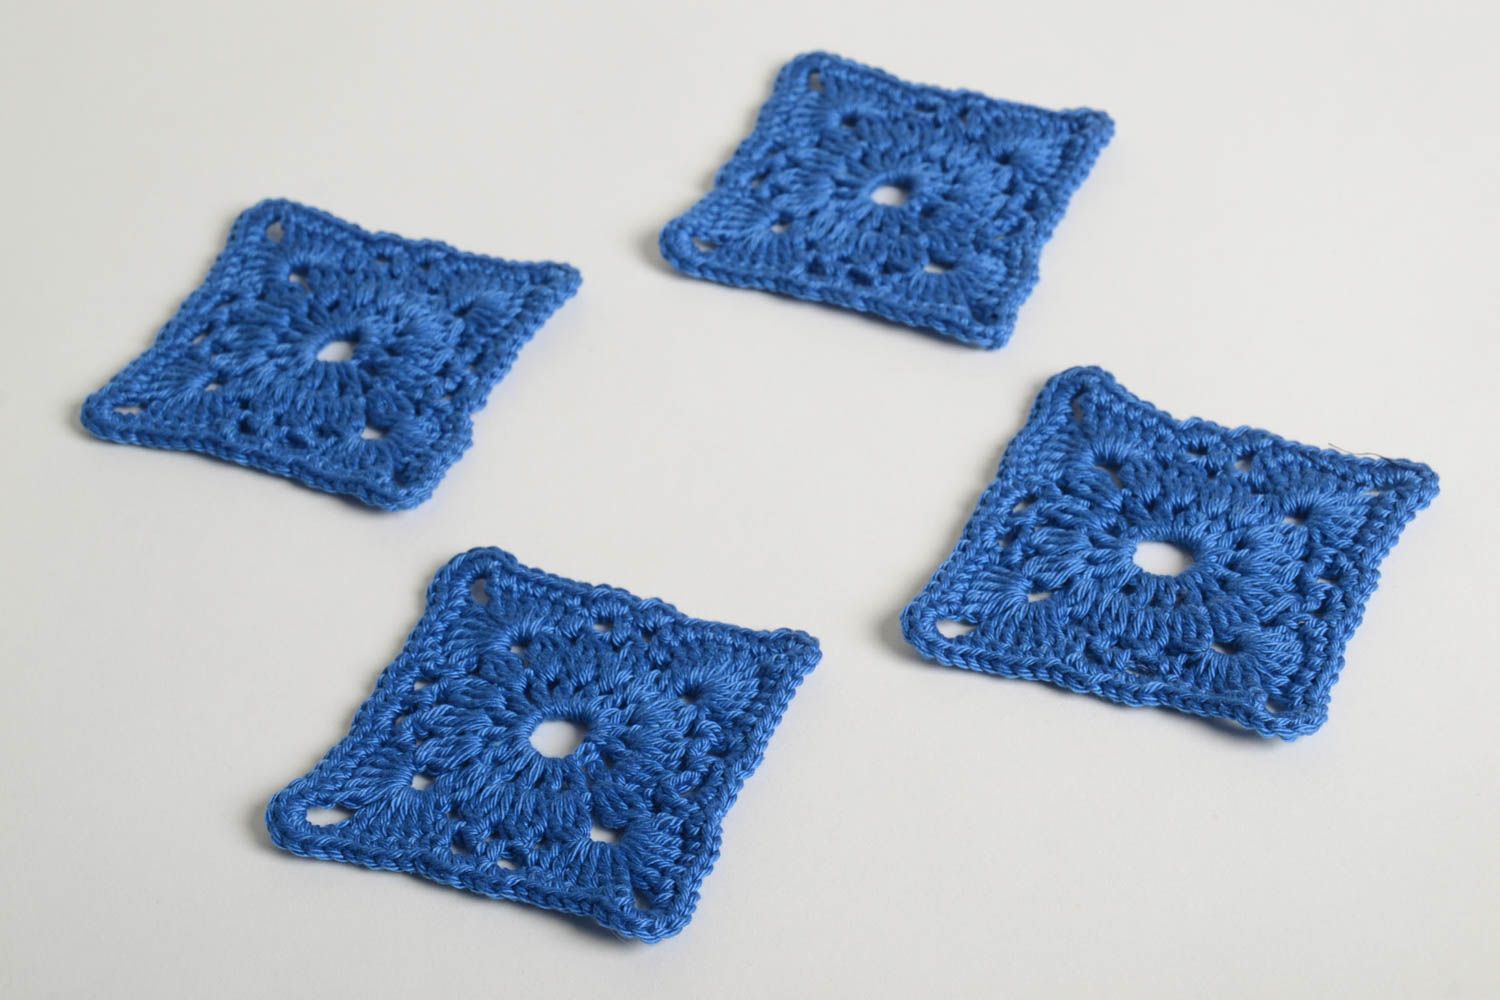 Cute handmade hot pads 4 pieces crochet coaster home textiles kitchen supplies photo 4